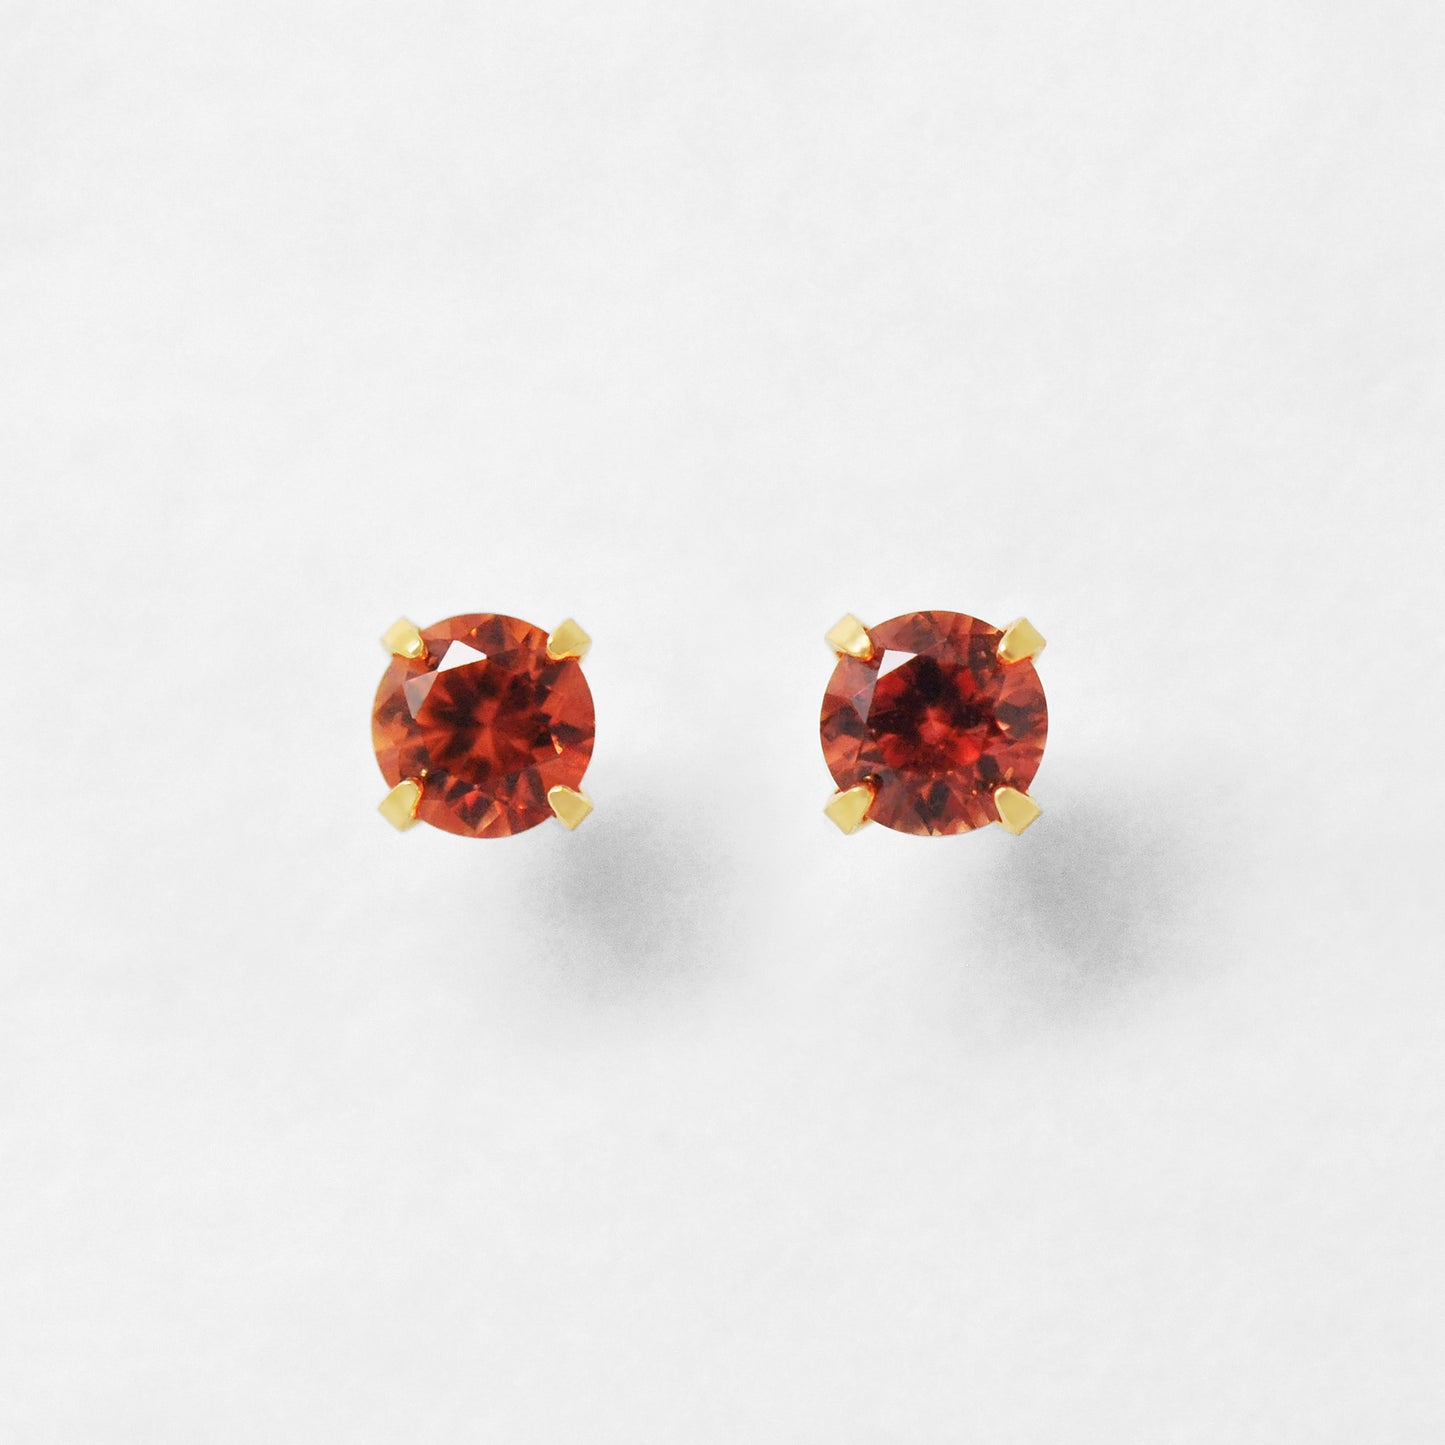 [Second Earrings] 18K Yellow Gold Orange Sapphire Earrings - Product Image